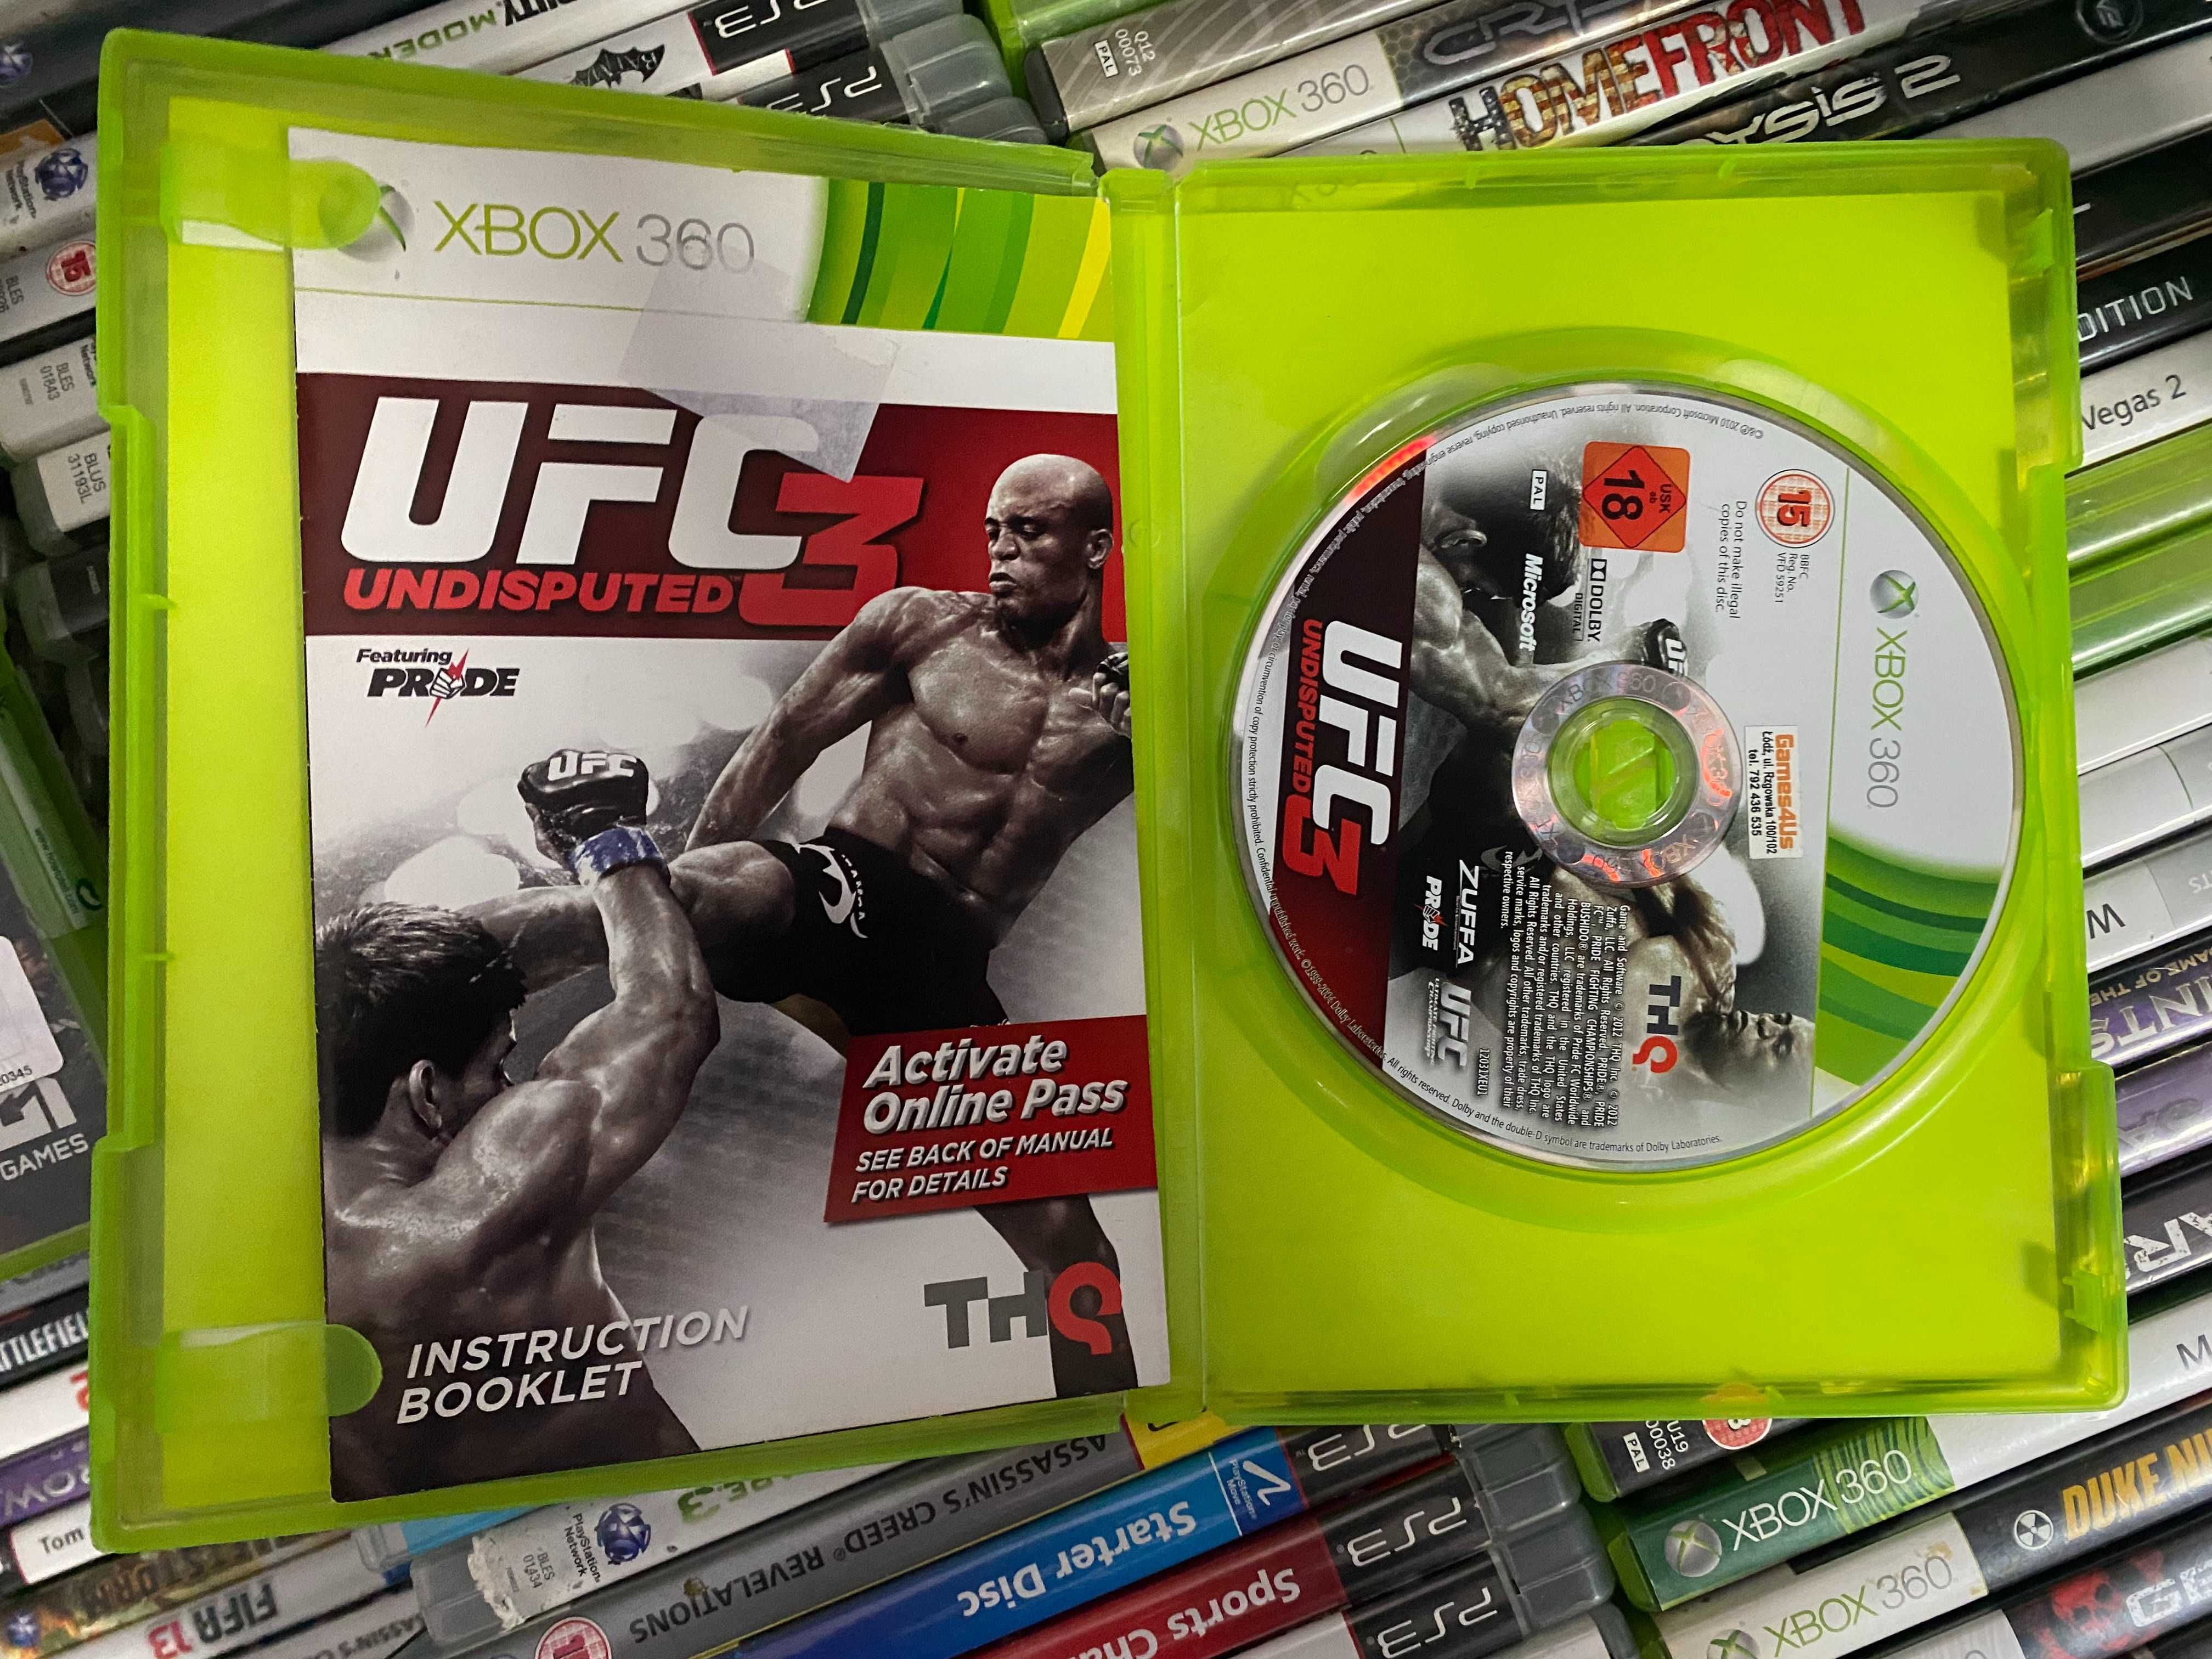 UFC 3 Undisputed|Xbox 360